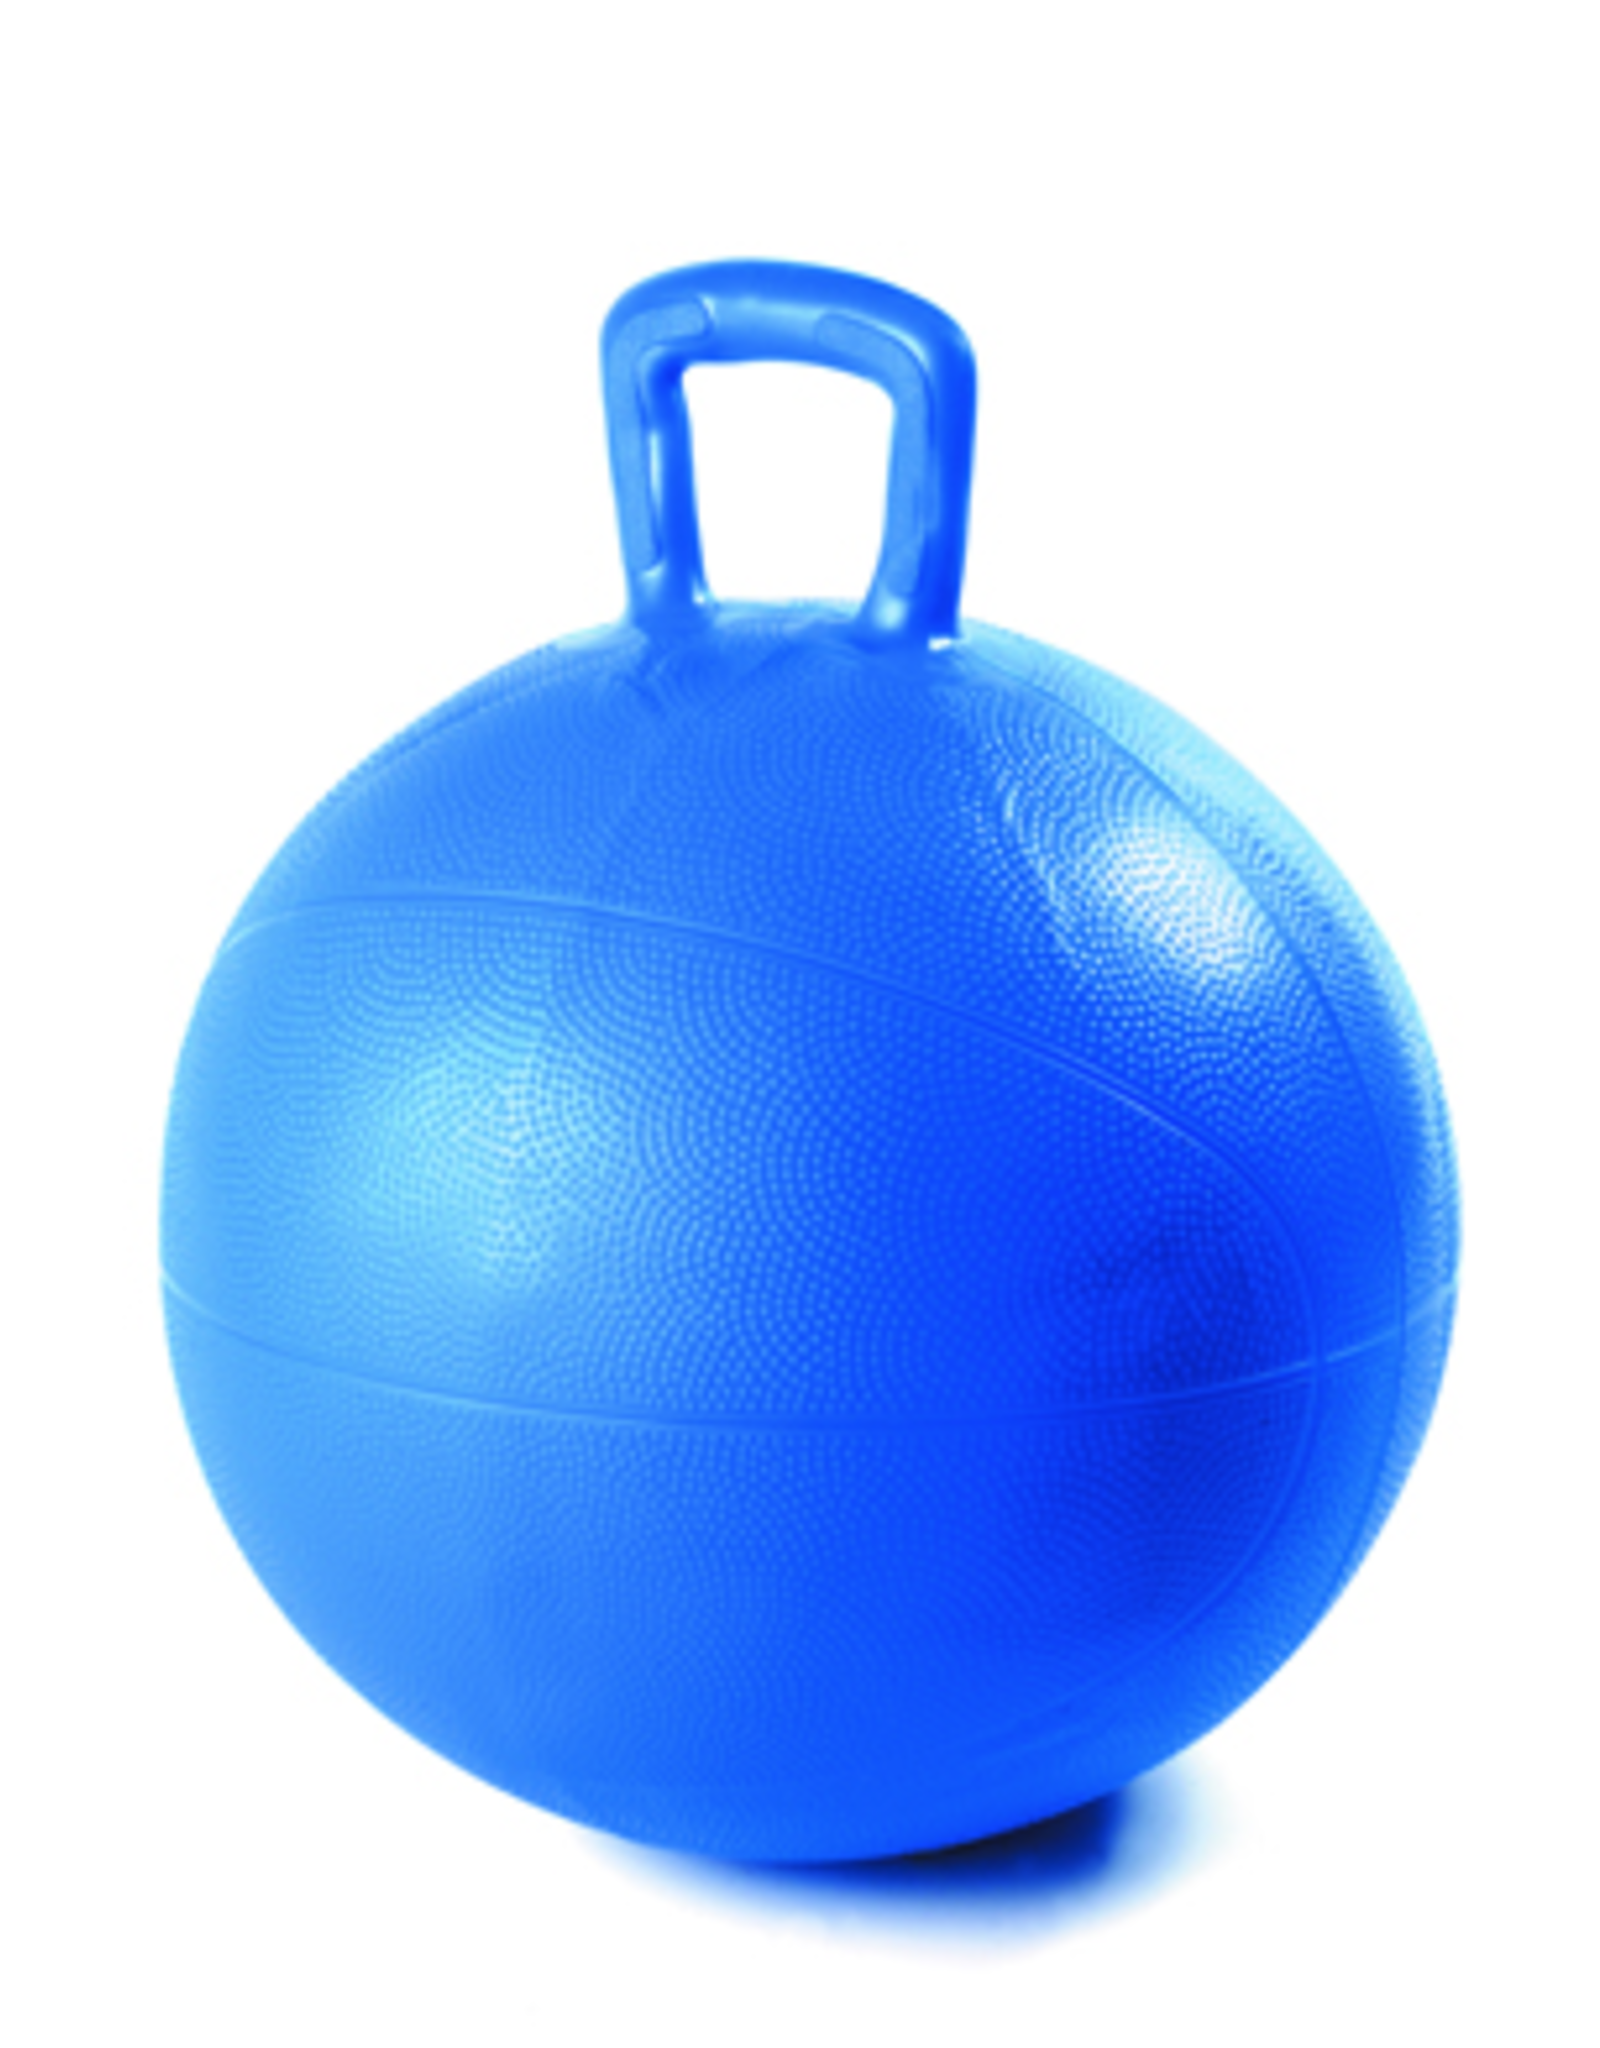 Playwell Hop-N-Bounce Ball